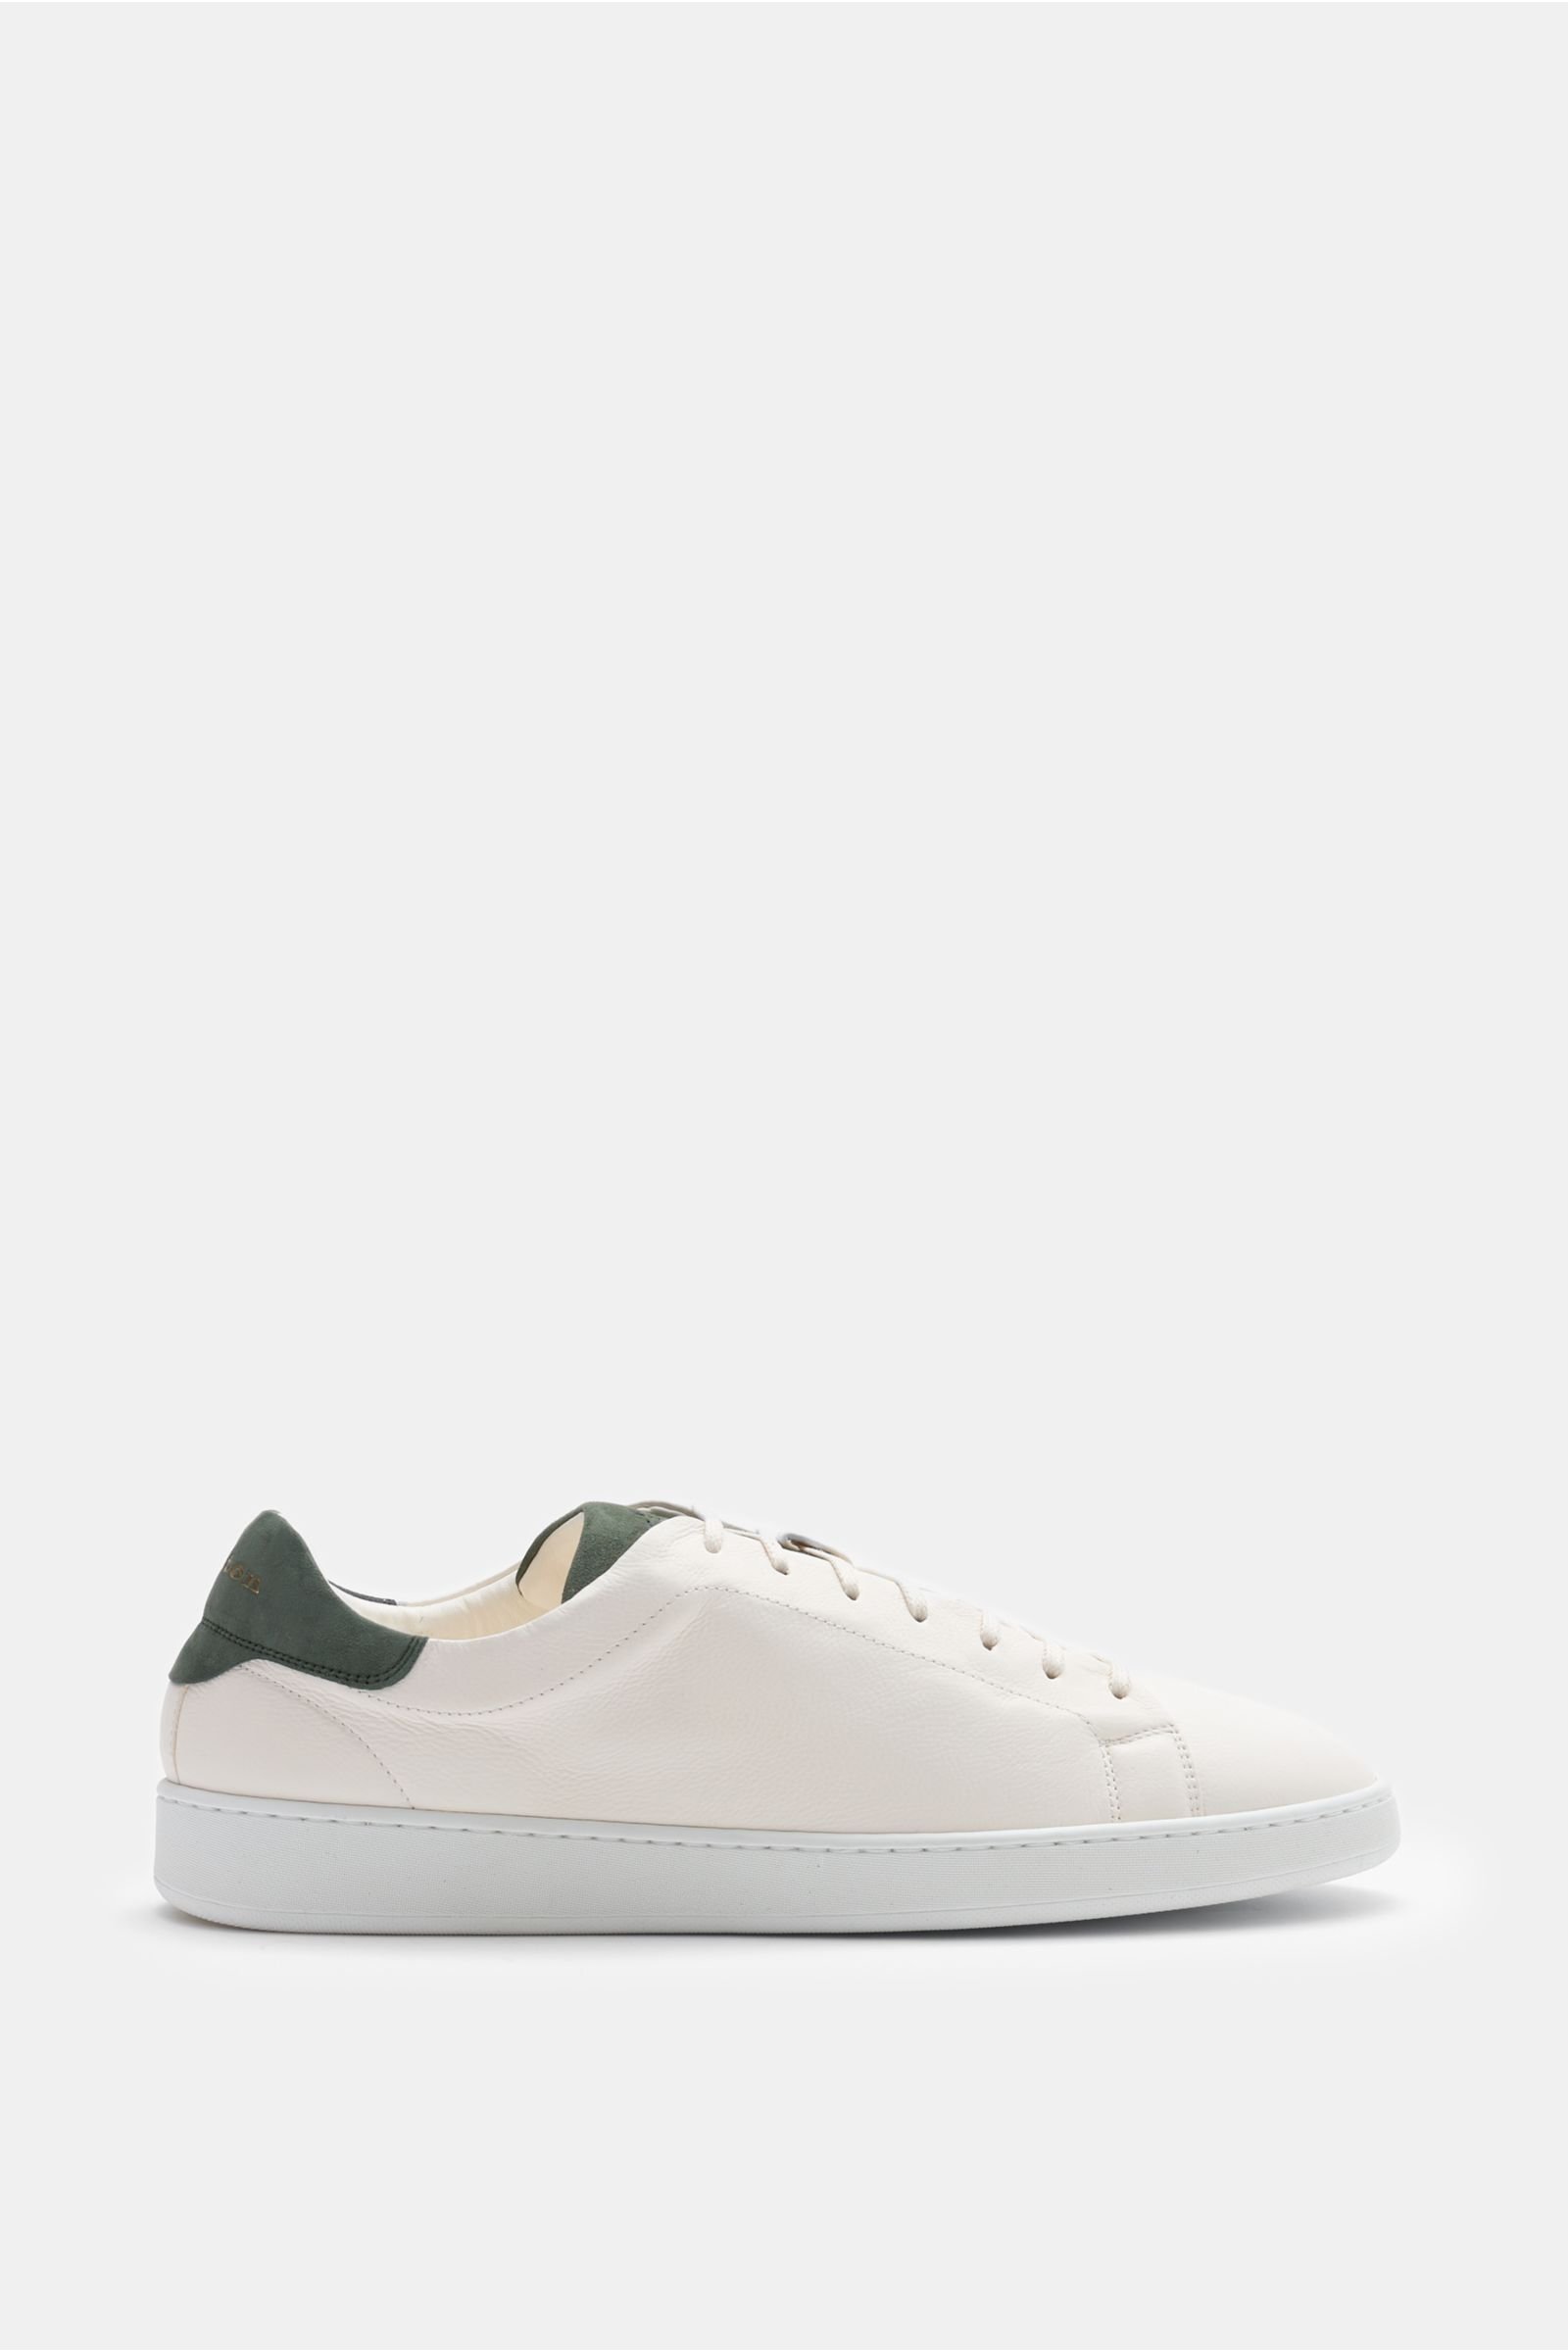 Sneakers cream/olive